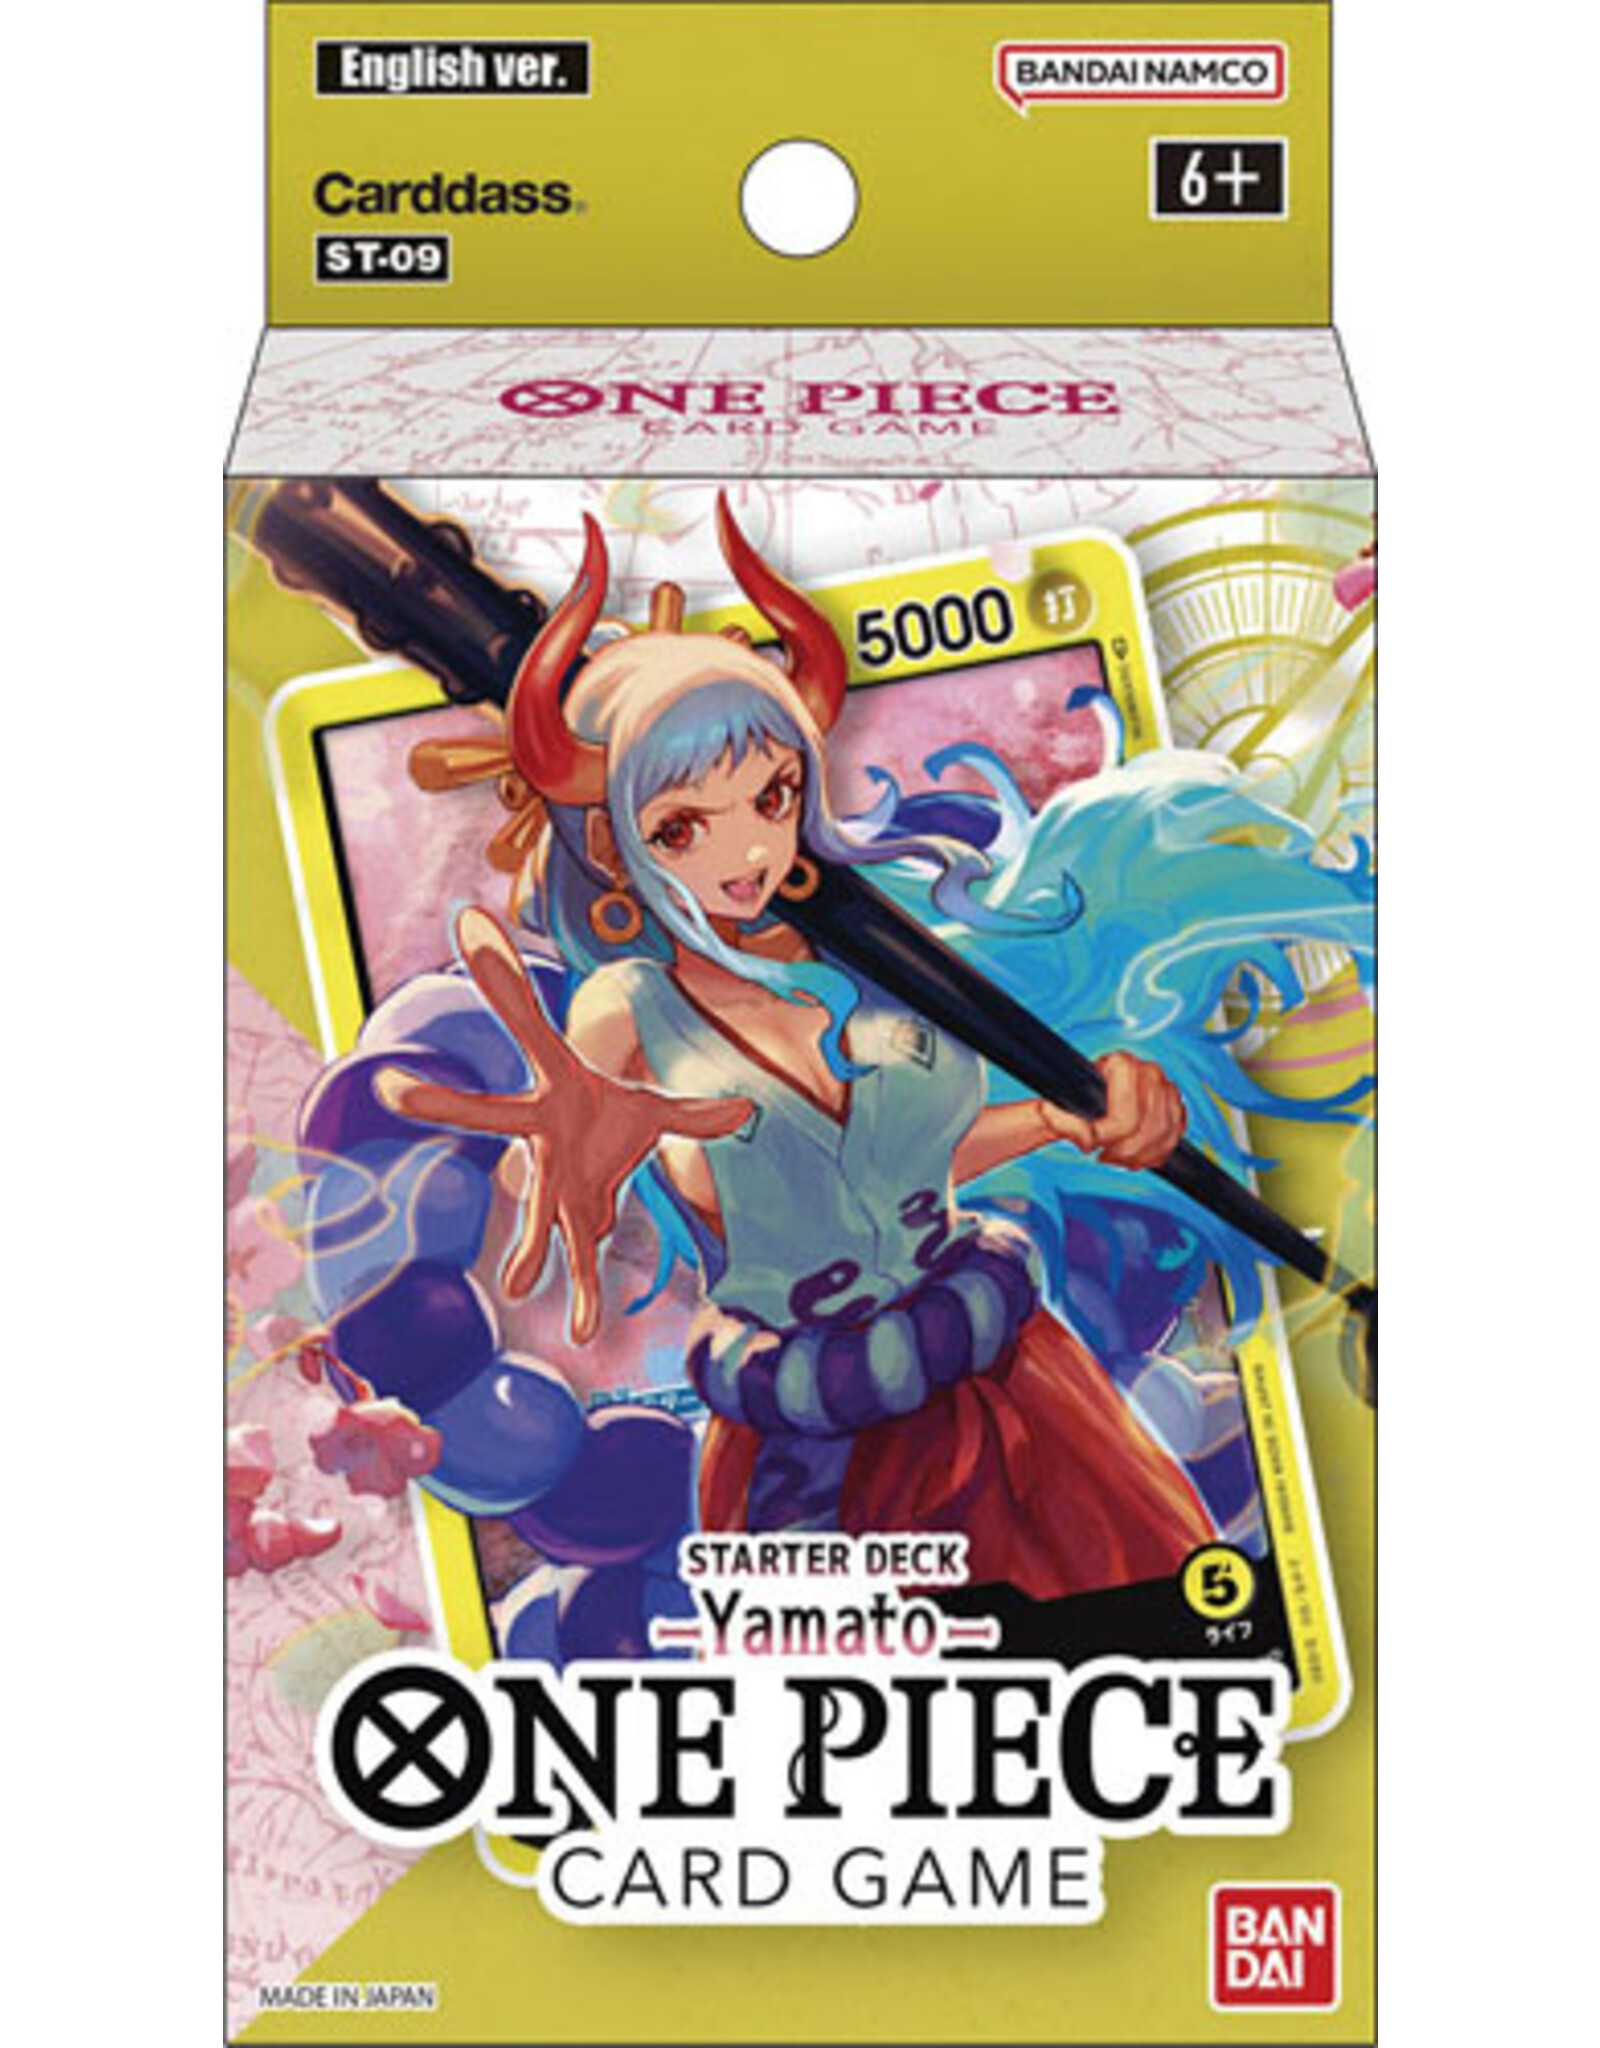 One Piece Deck Yamoto ST-09